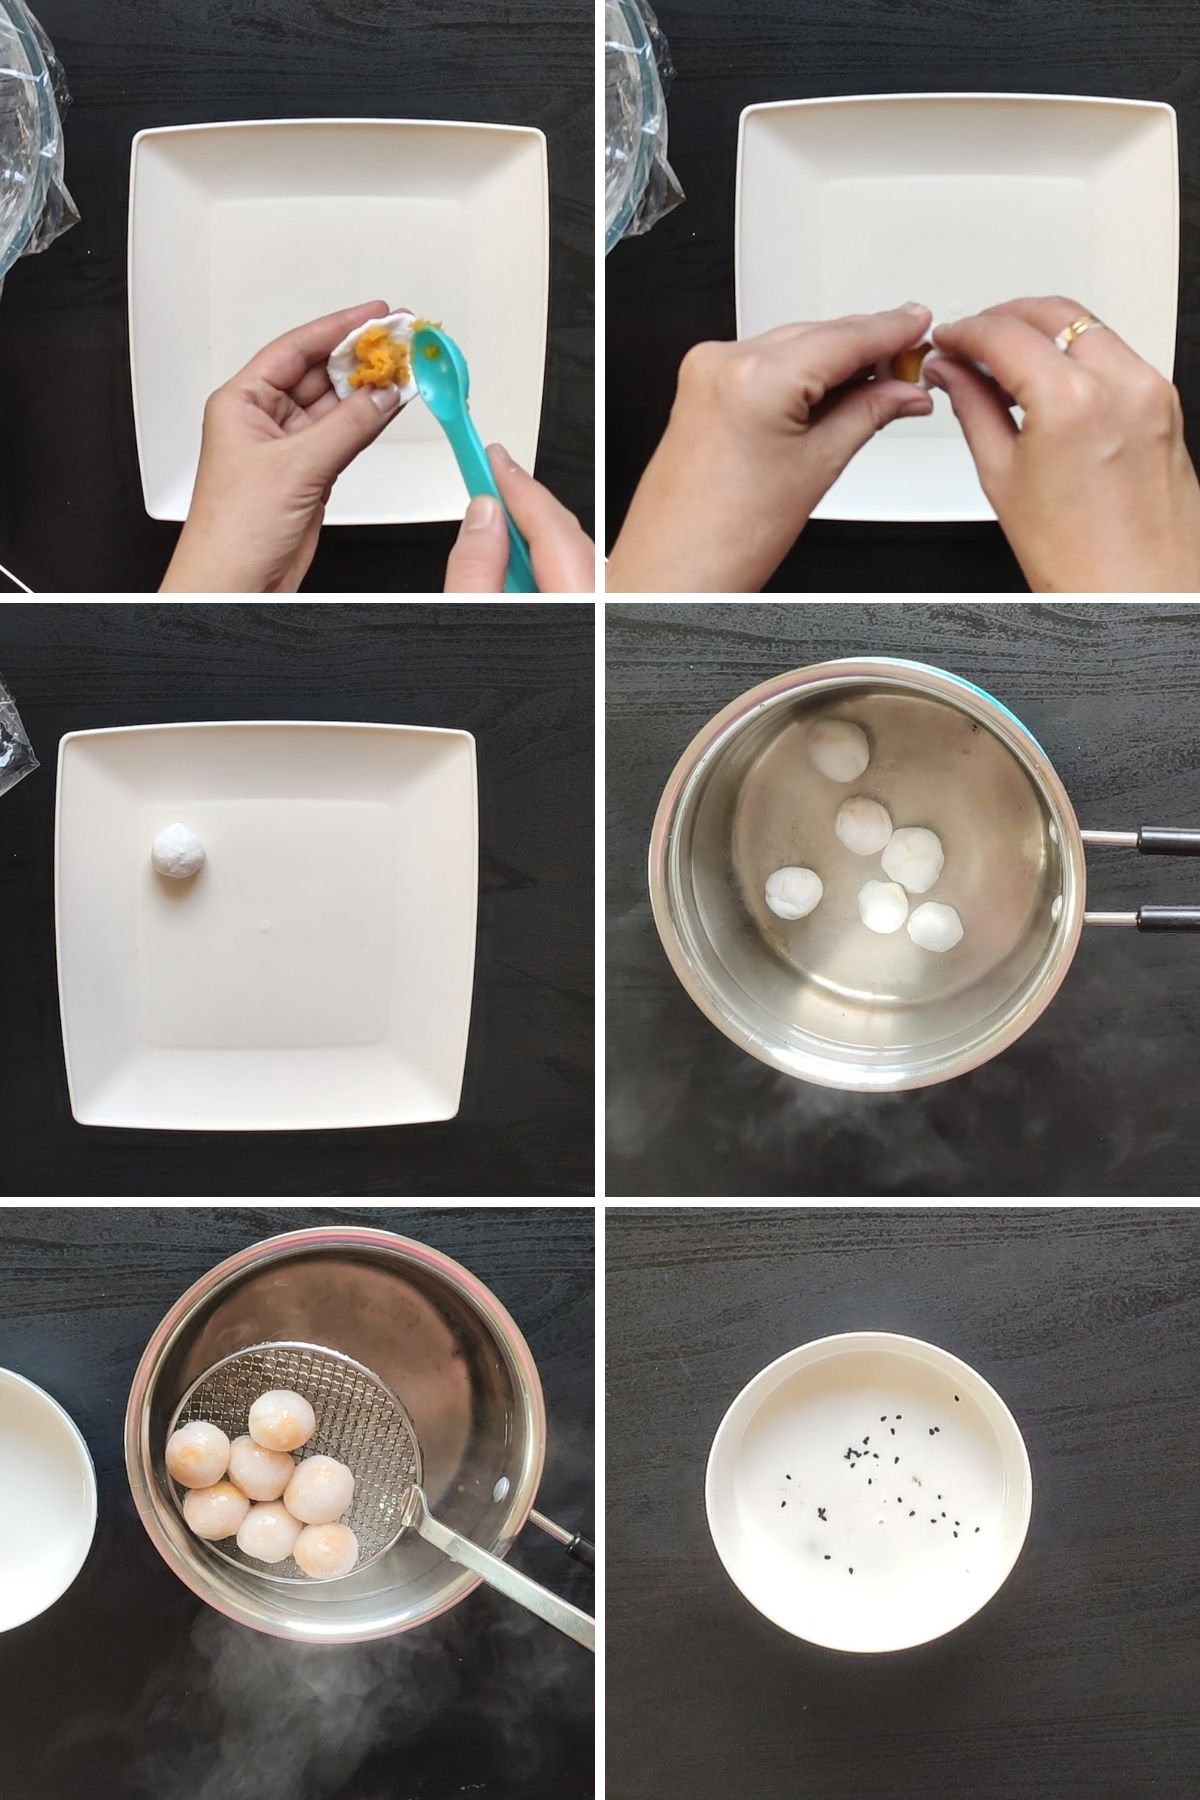 Steps to make sweet potato dumplings